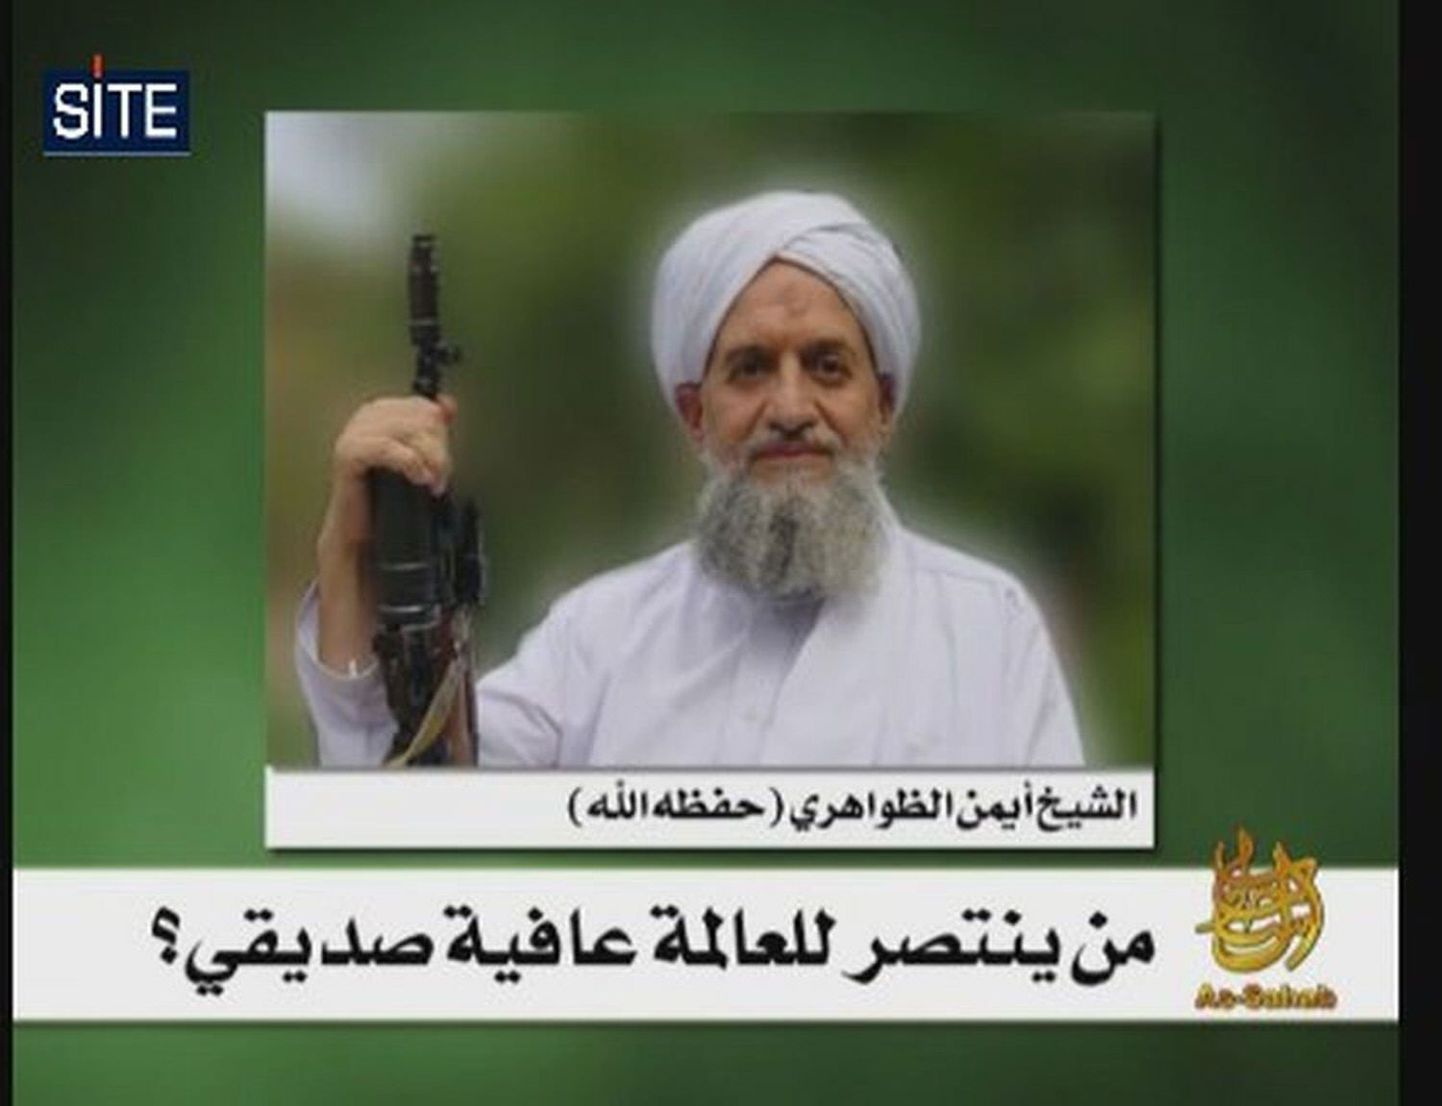 Al-Qaeda uus liider Ayman al-Zawahiri.